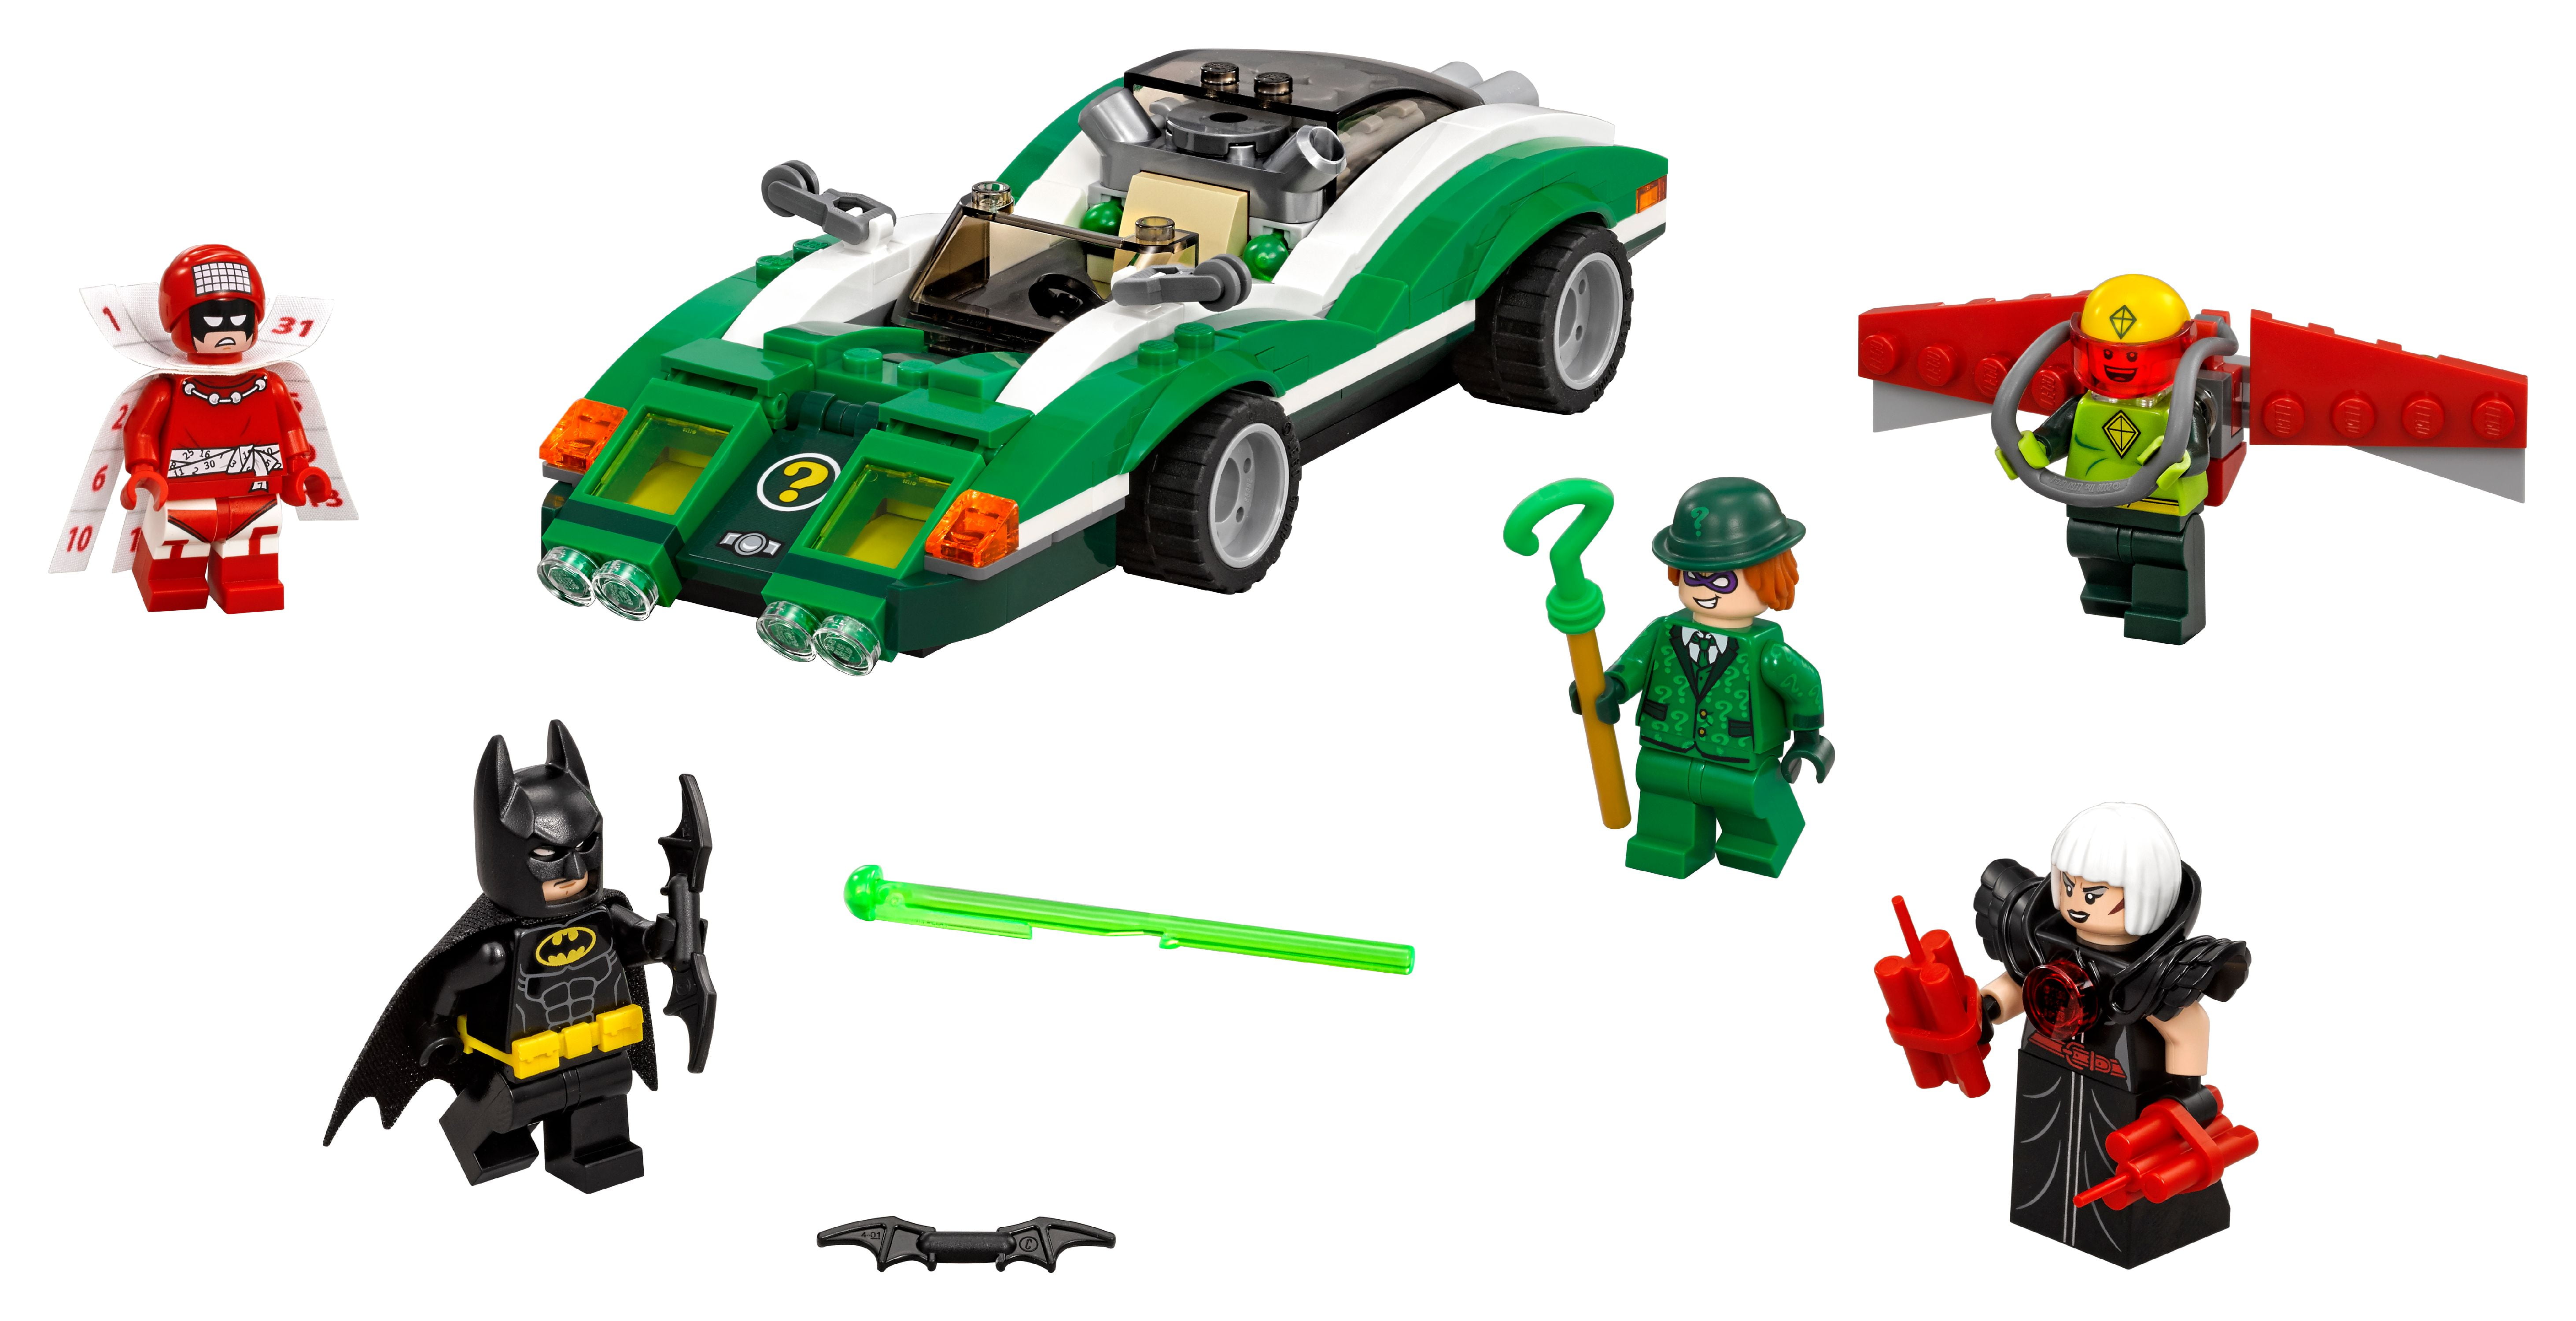 LEGO Batman Movie The Riddler Riddle Racer 70903 